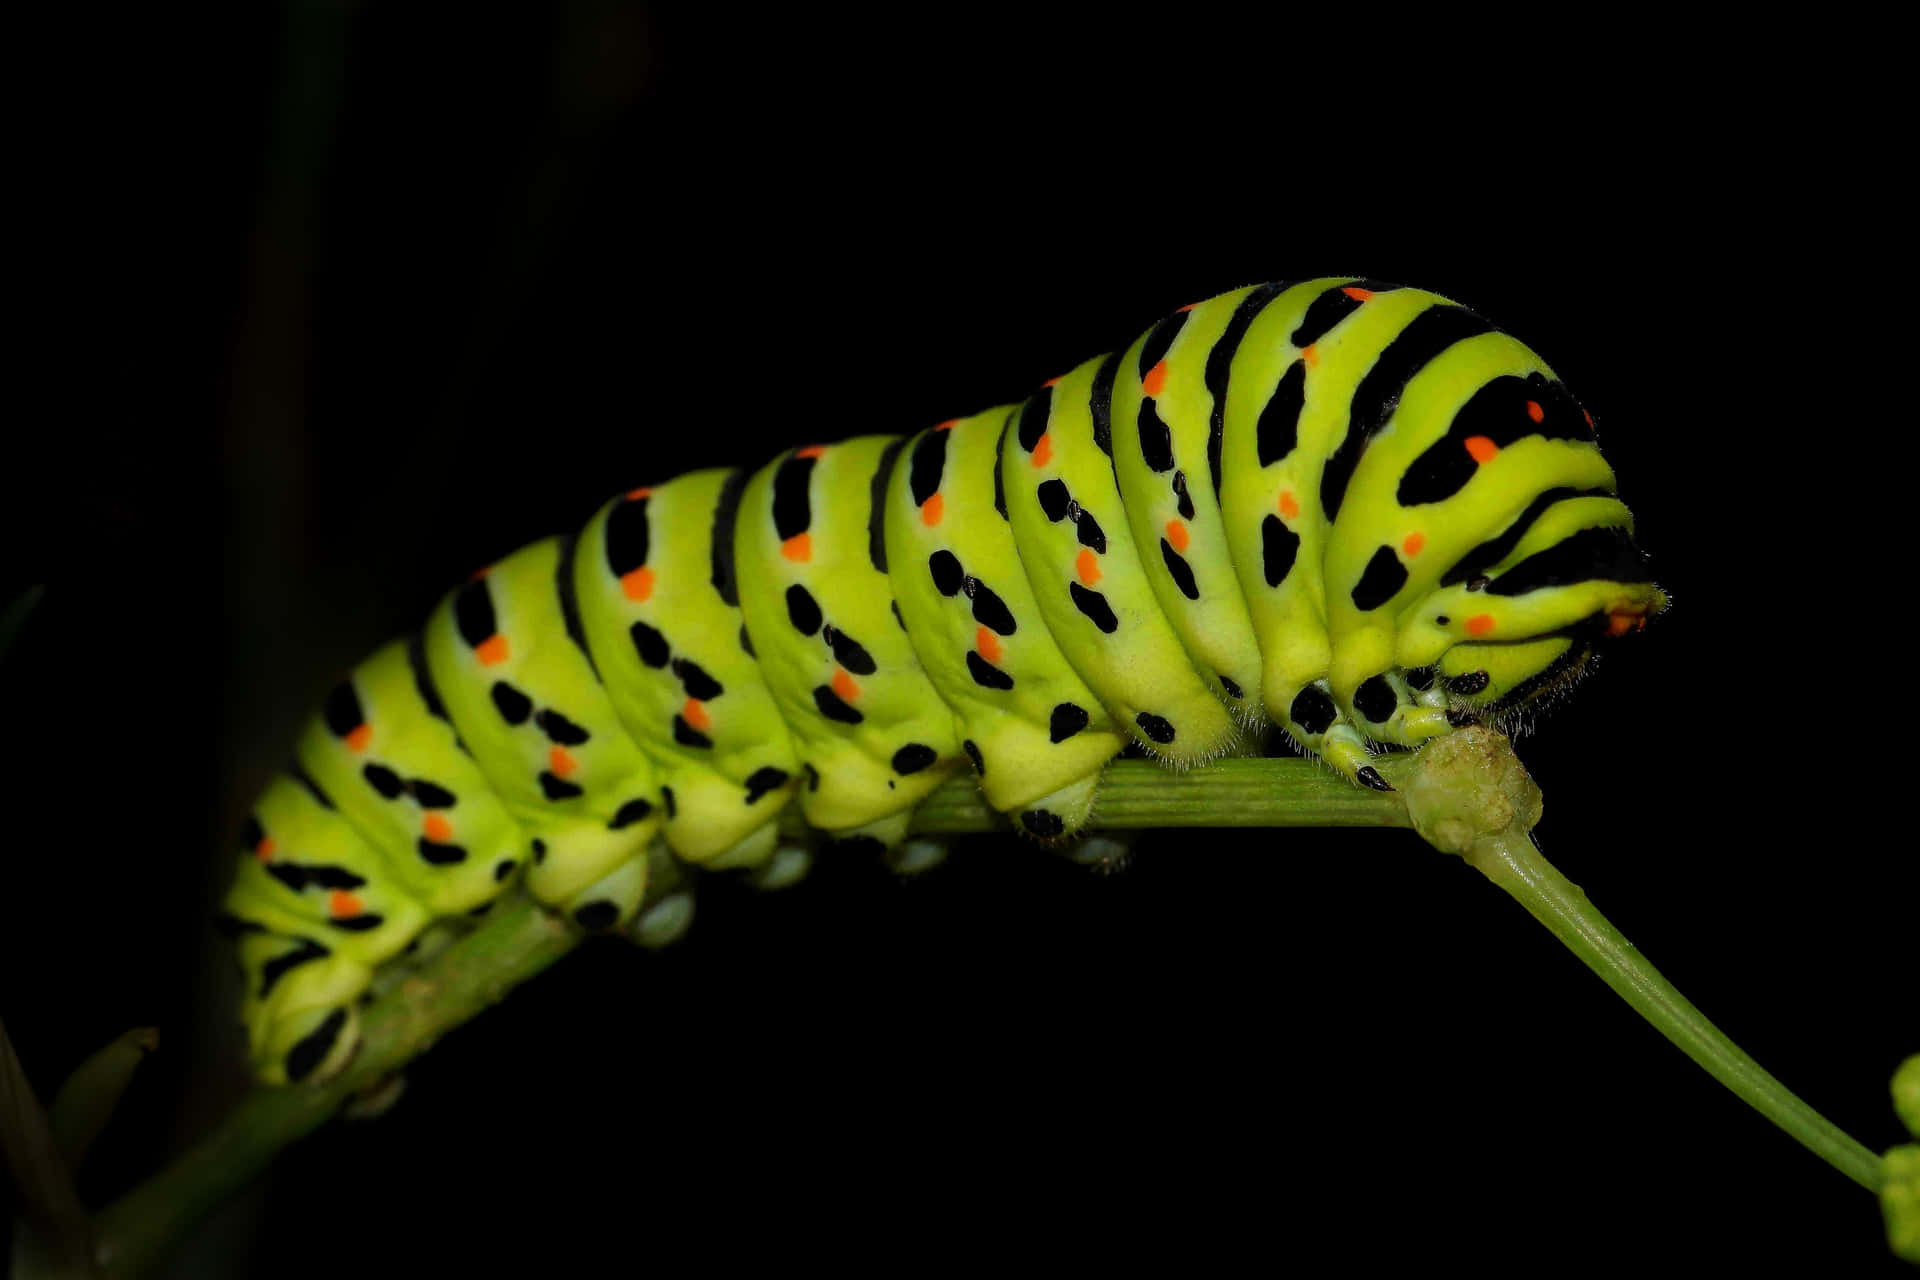 Close Up View of a Cute Caterpillar